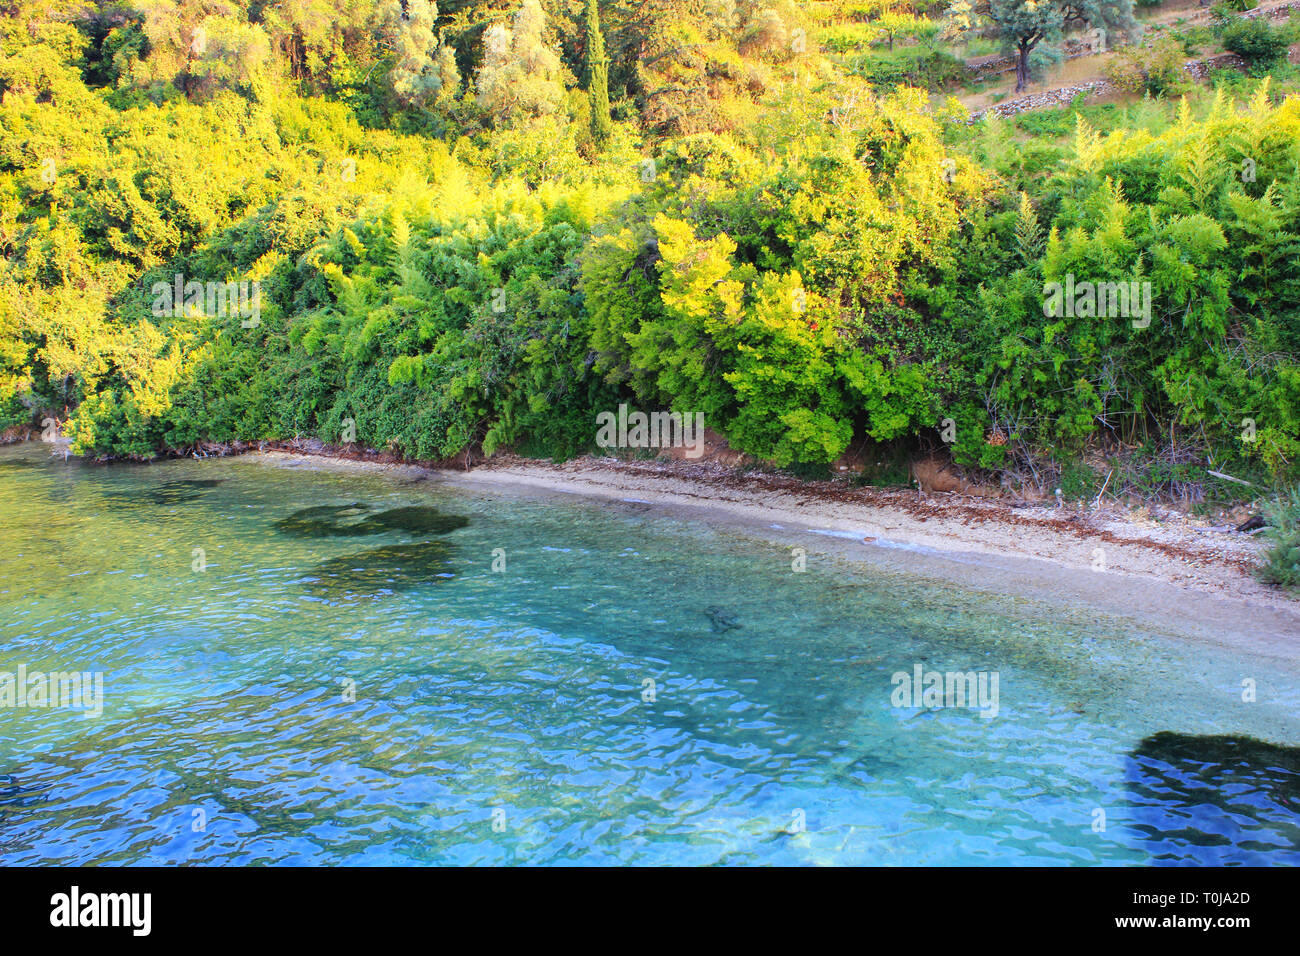 Wunderschöne Insel Scorpios (Ionisches Meer), von Onassis in Familienbesitz. Stockfoto